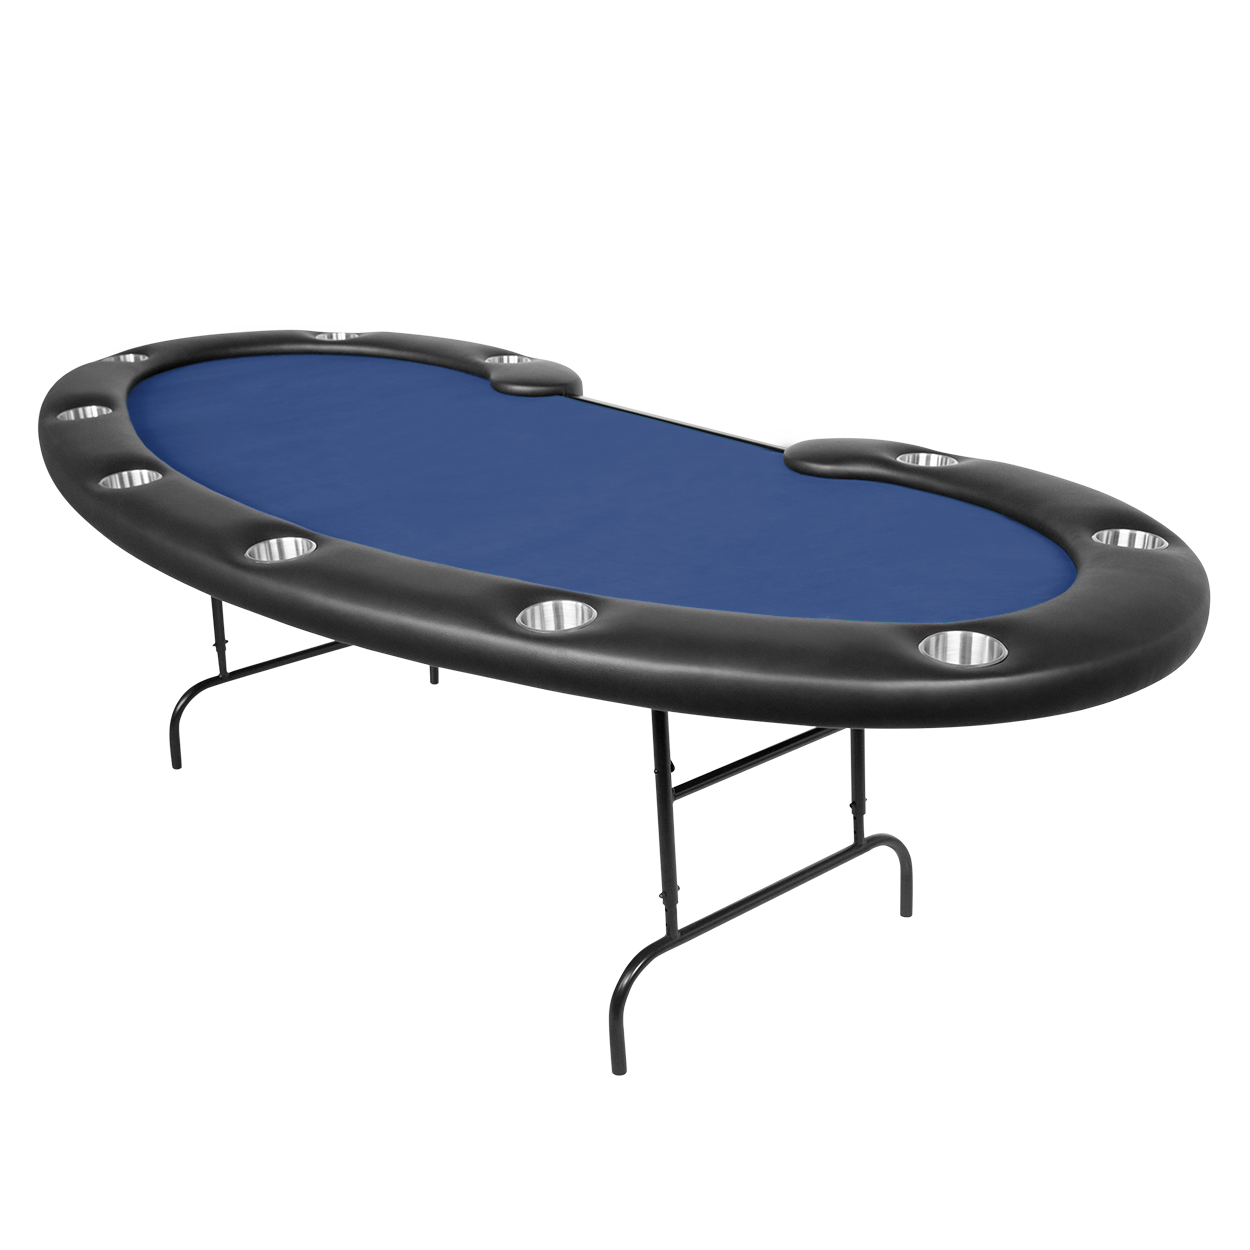 Kidney shaped folding poker table with blue velveteen game top.